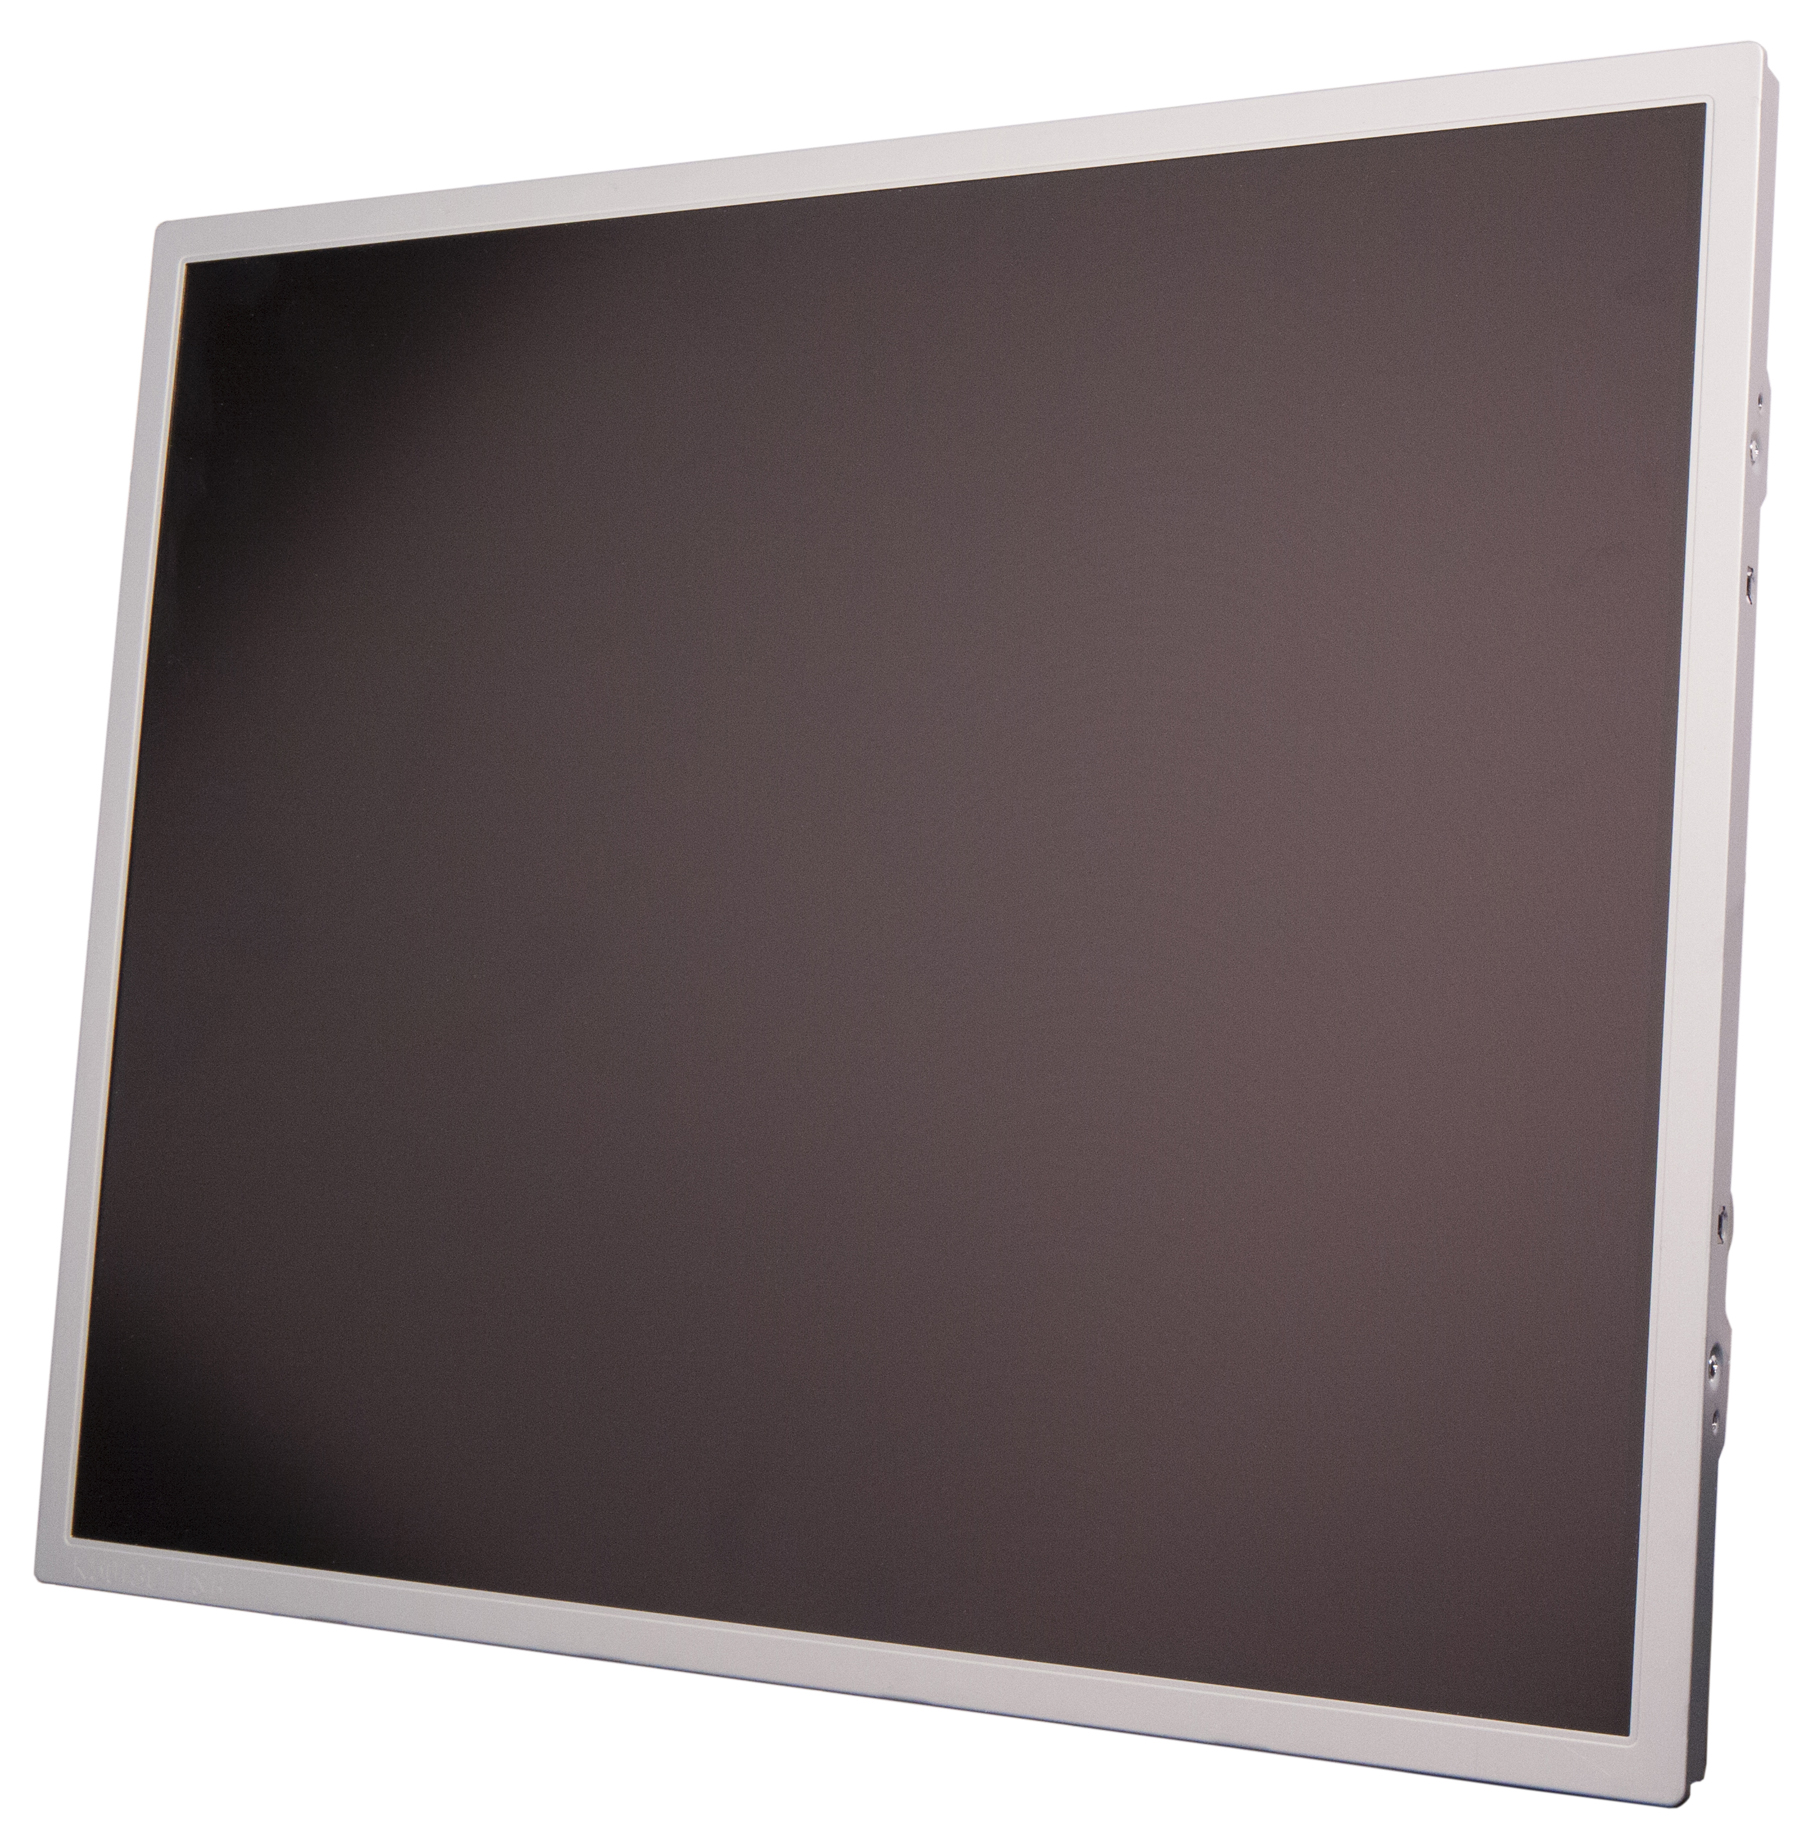 Sharp LQ190E1LX75 19-inch LCD